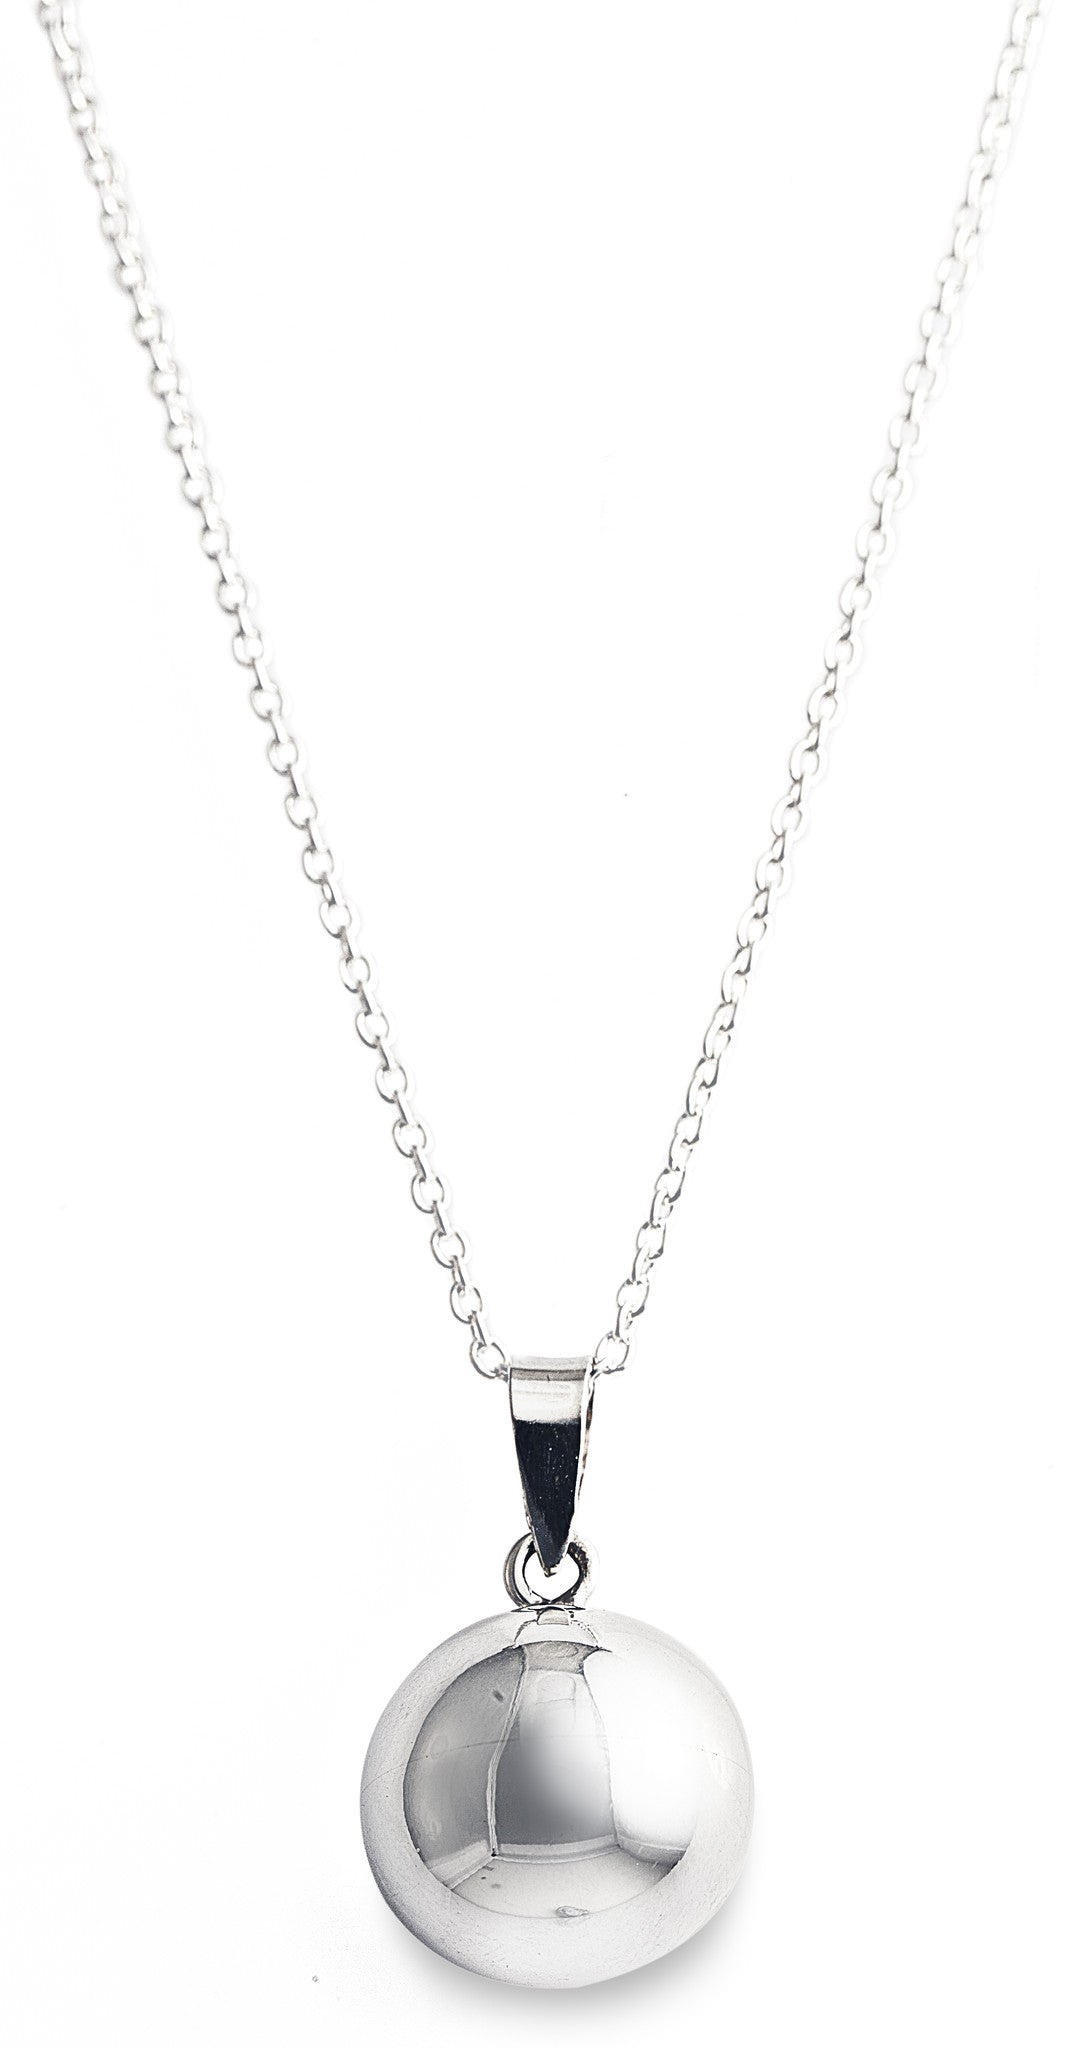 Medium Villa Necklace - 925 Sterling Silver Ball Pendant. Worldwide Shipping. Jewellery by Bellagio & Co